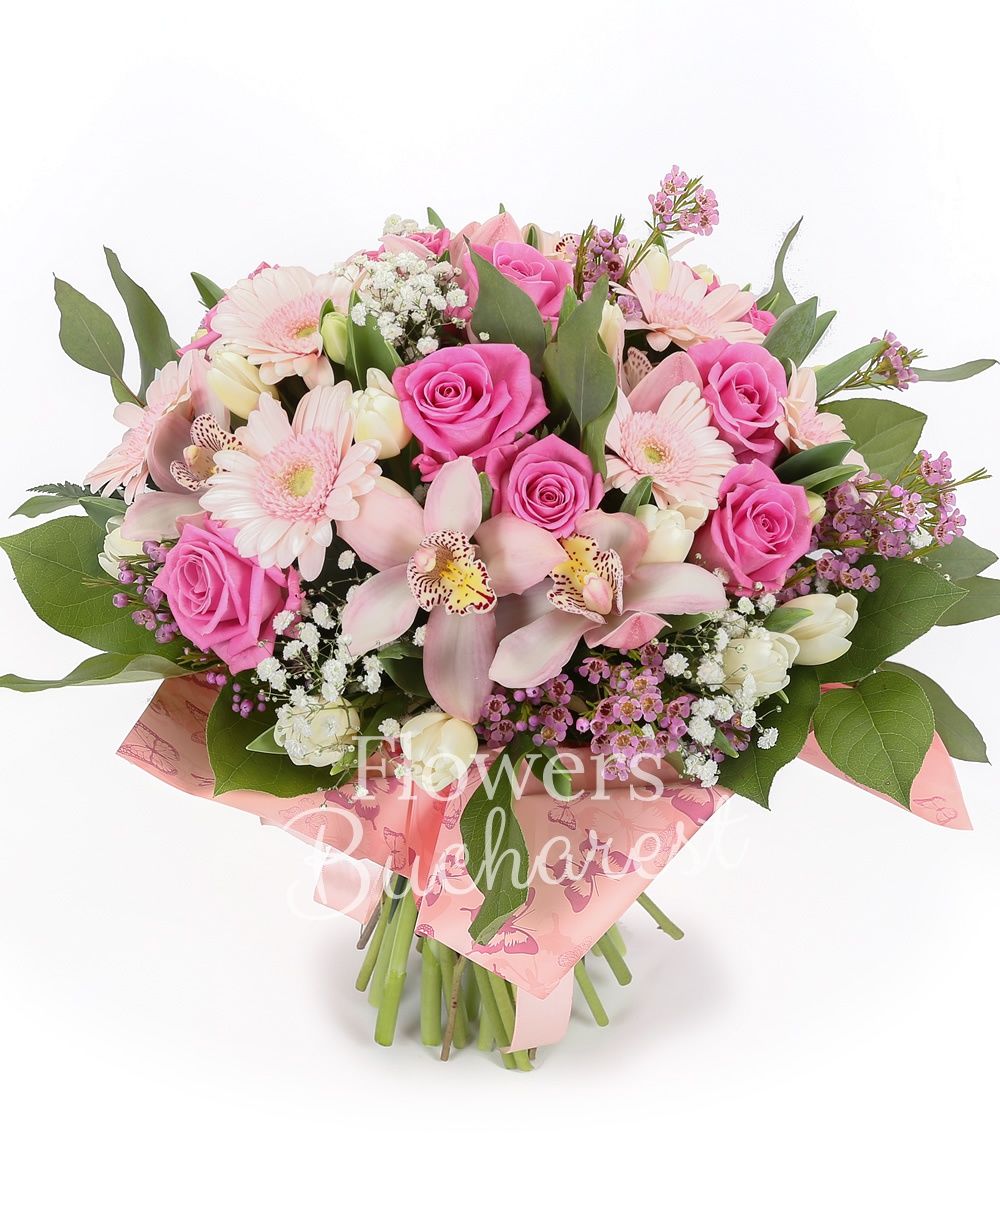 13 pink roses, 9 pink gerberas, pink cymbidium, 15 white tulips, 5 pink waxflowers, 2 gypsophila, greenery